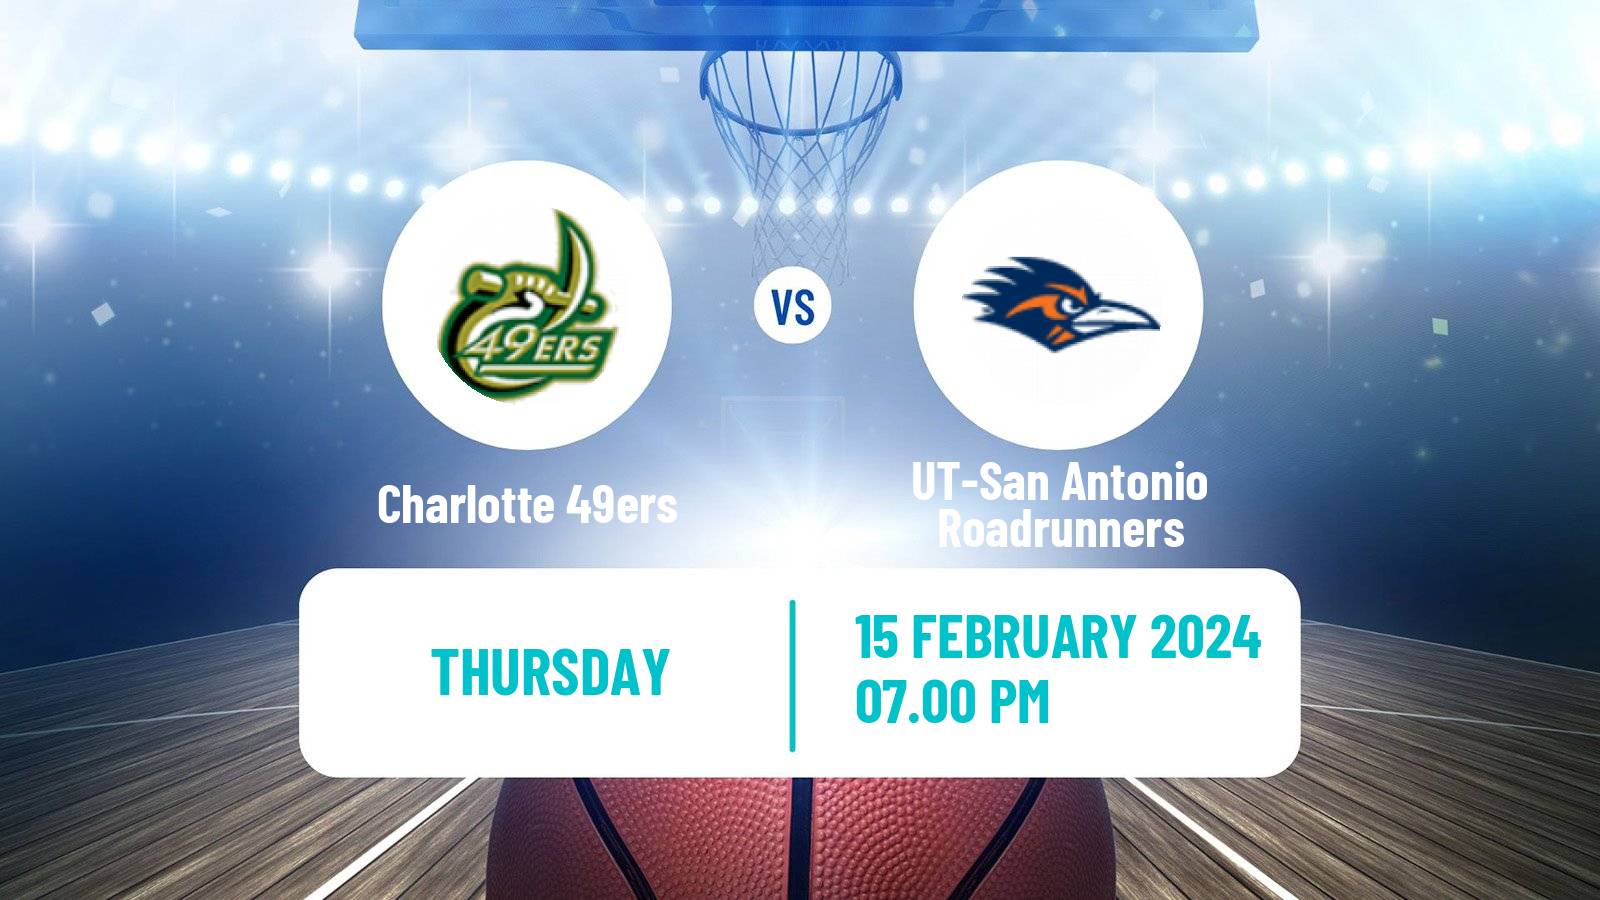 Basketball NCAA College Basketball Charlotte 49ers - UT-San Antonio Roadrunners